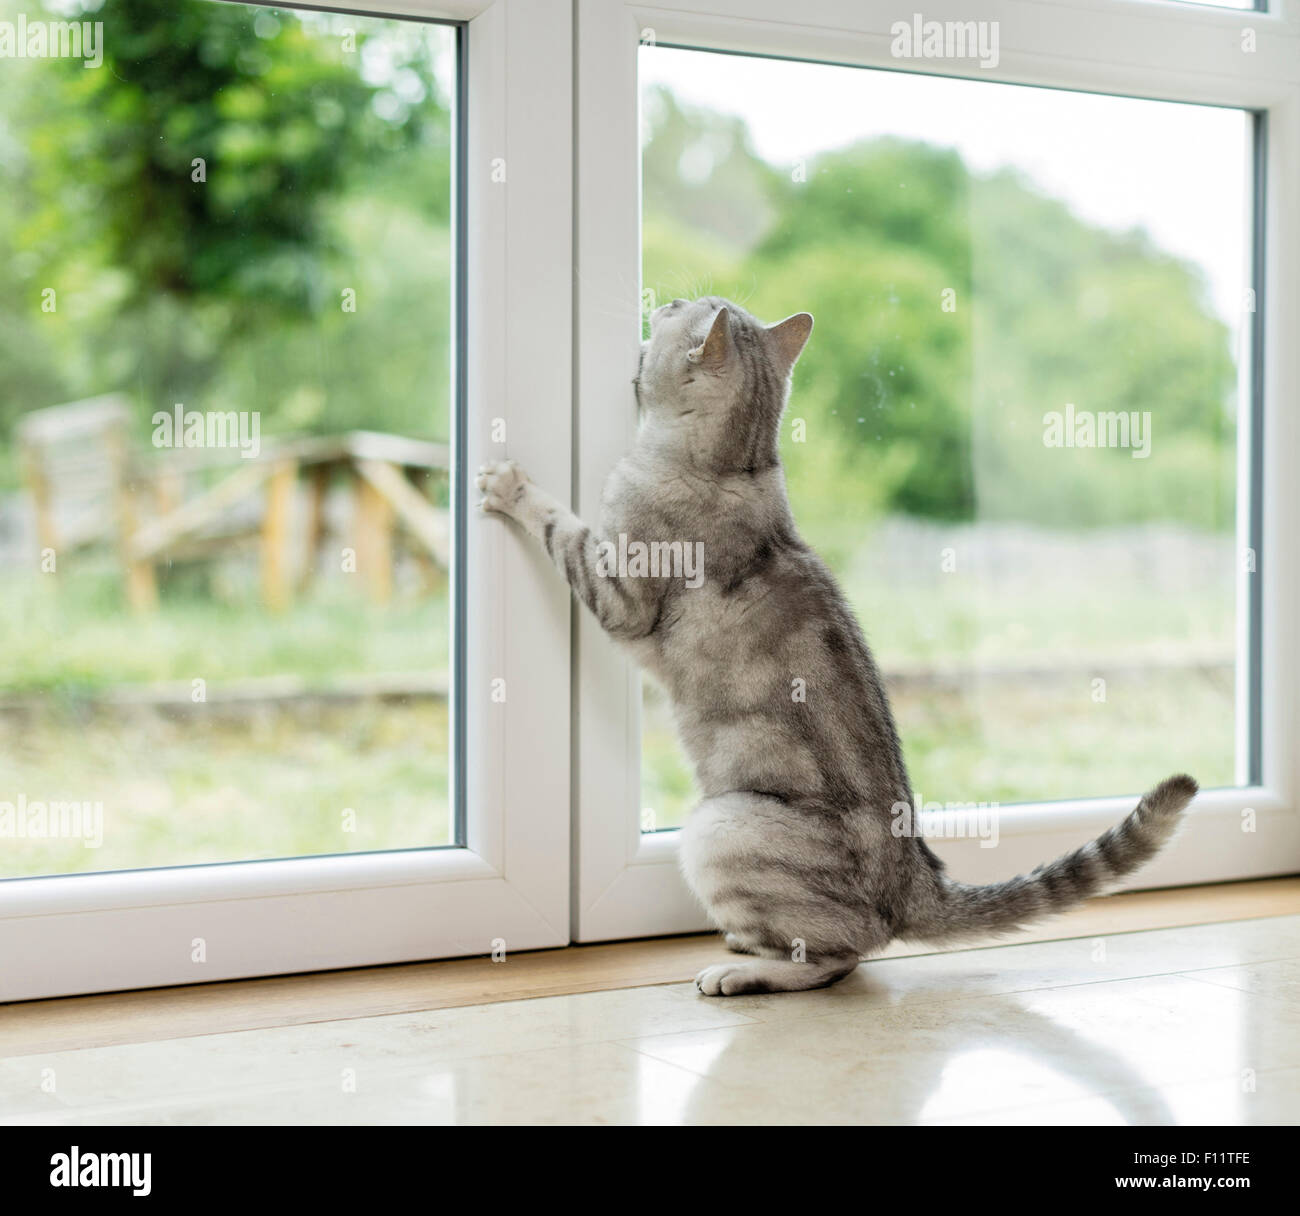 British Shorthair gato atigrado tomcat sscratching en ventana, quisiera salir Foto de stock